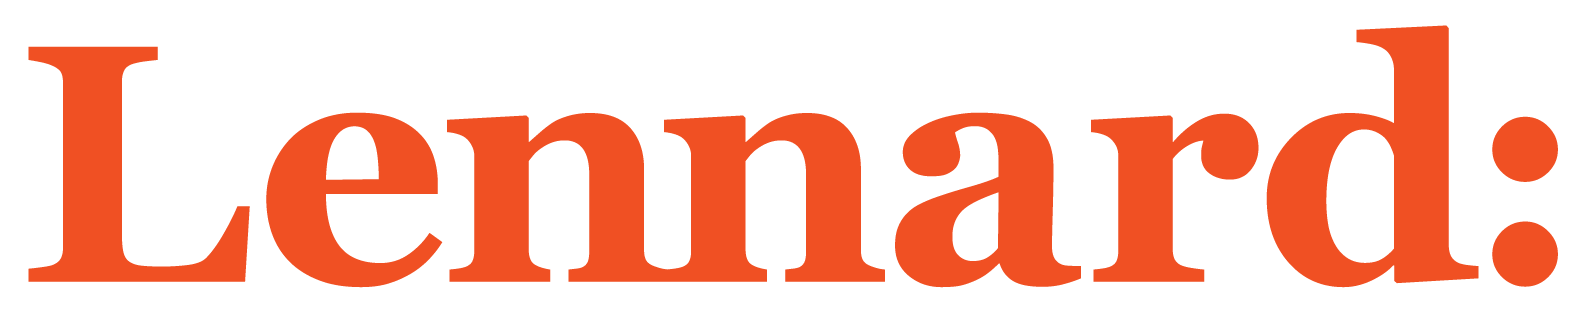 Lennard logo